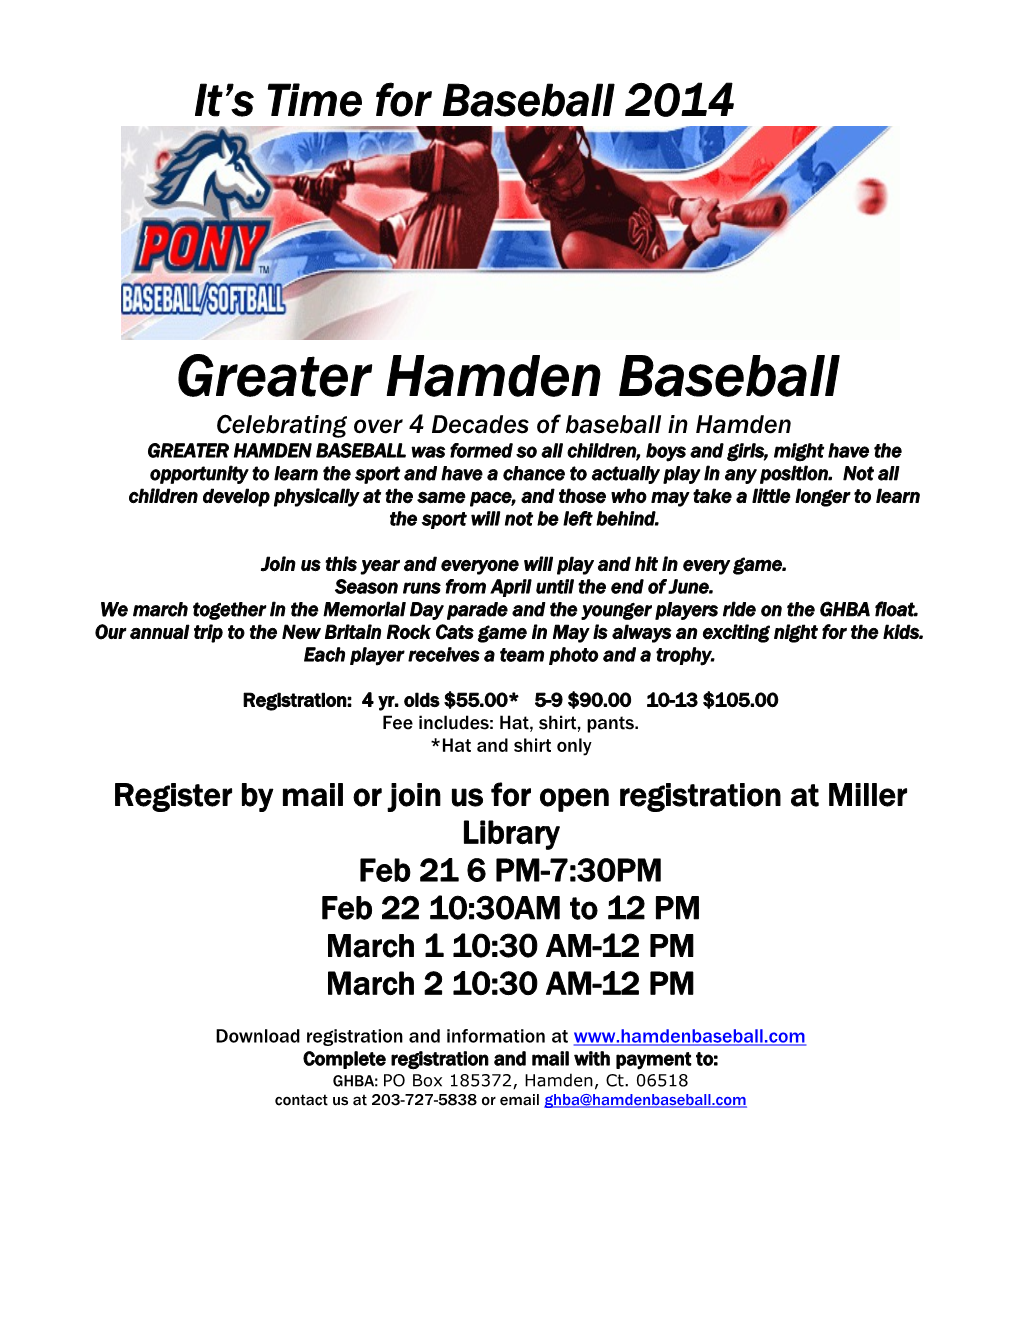 GHBA (Greater Hamden Baseball Association)